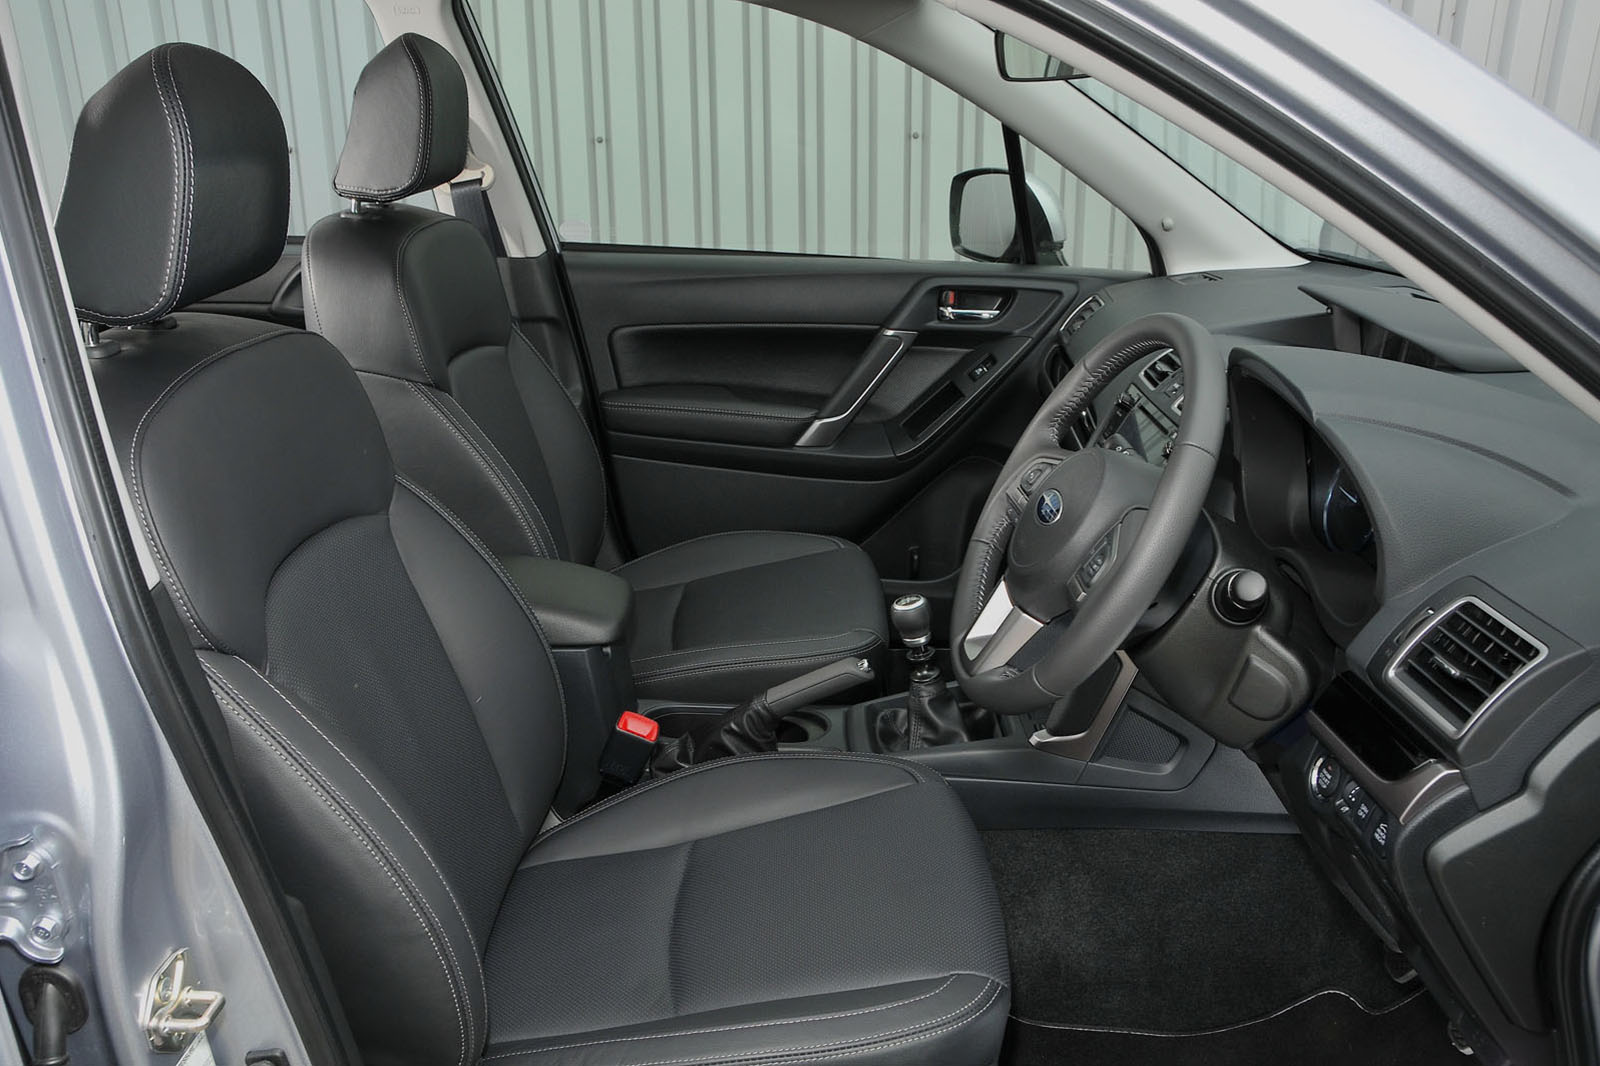 Subaru Forester interior